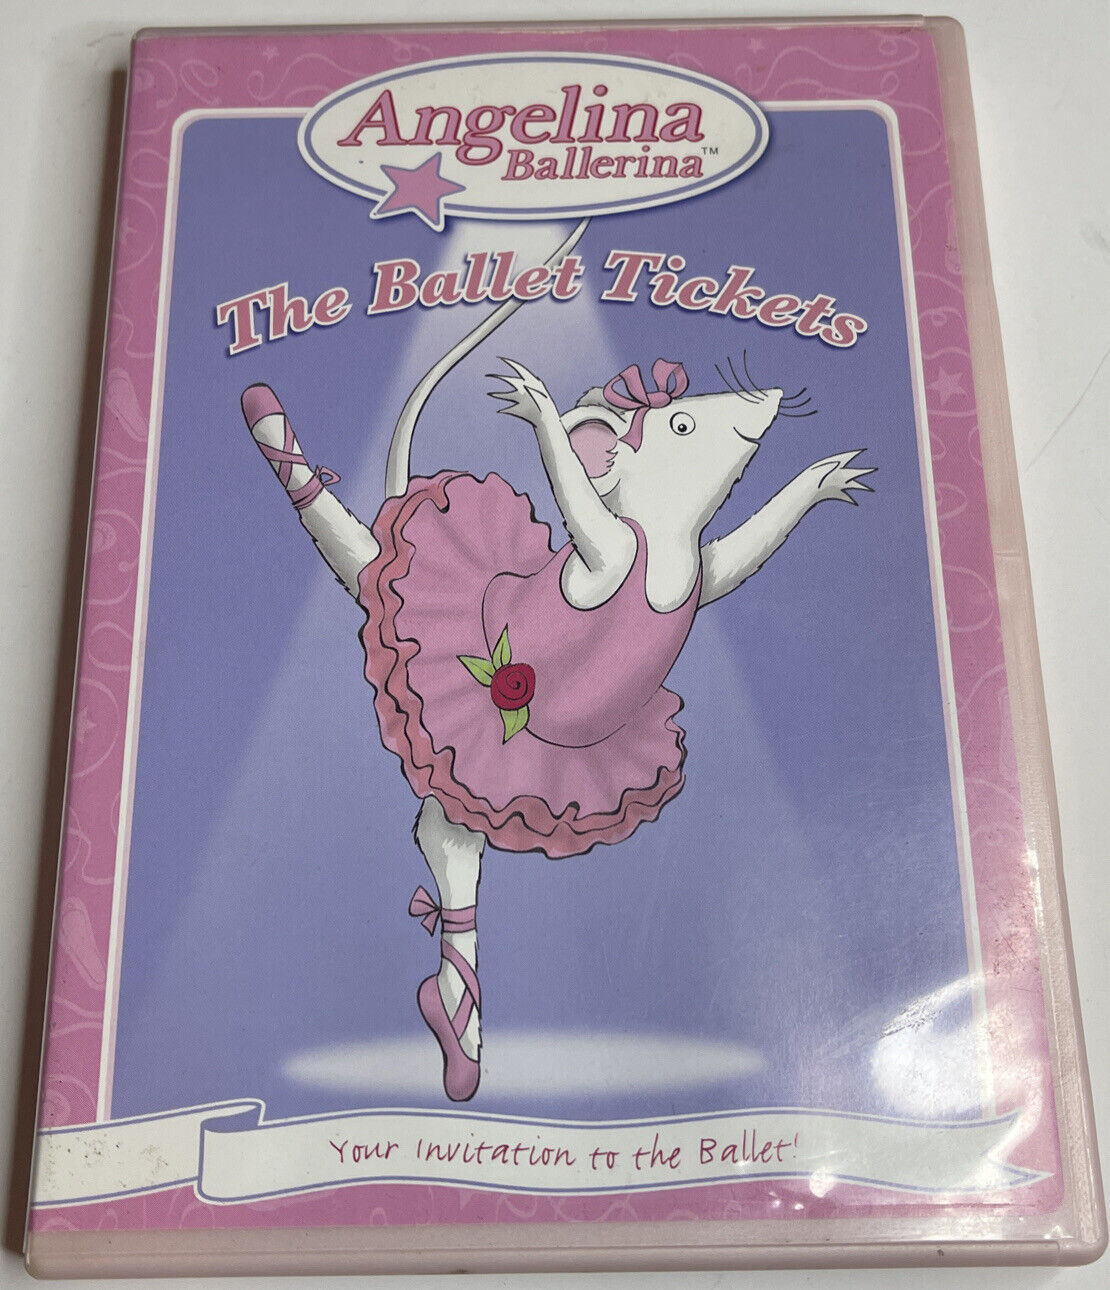 Angelina Ballerina - The Ballet Tickets (DVD, 2004) NEW | eBay